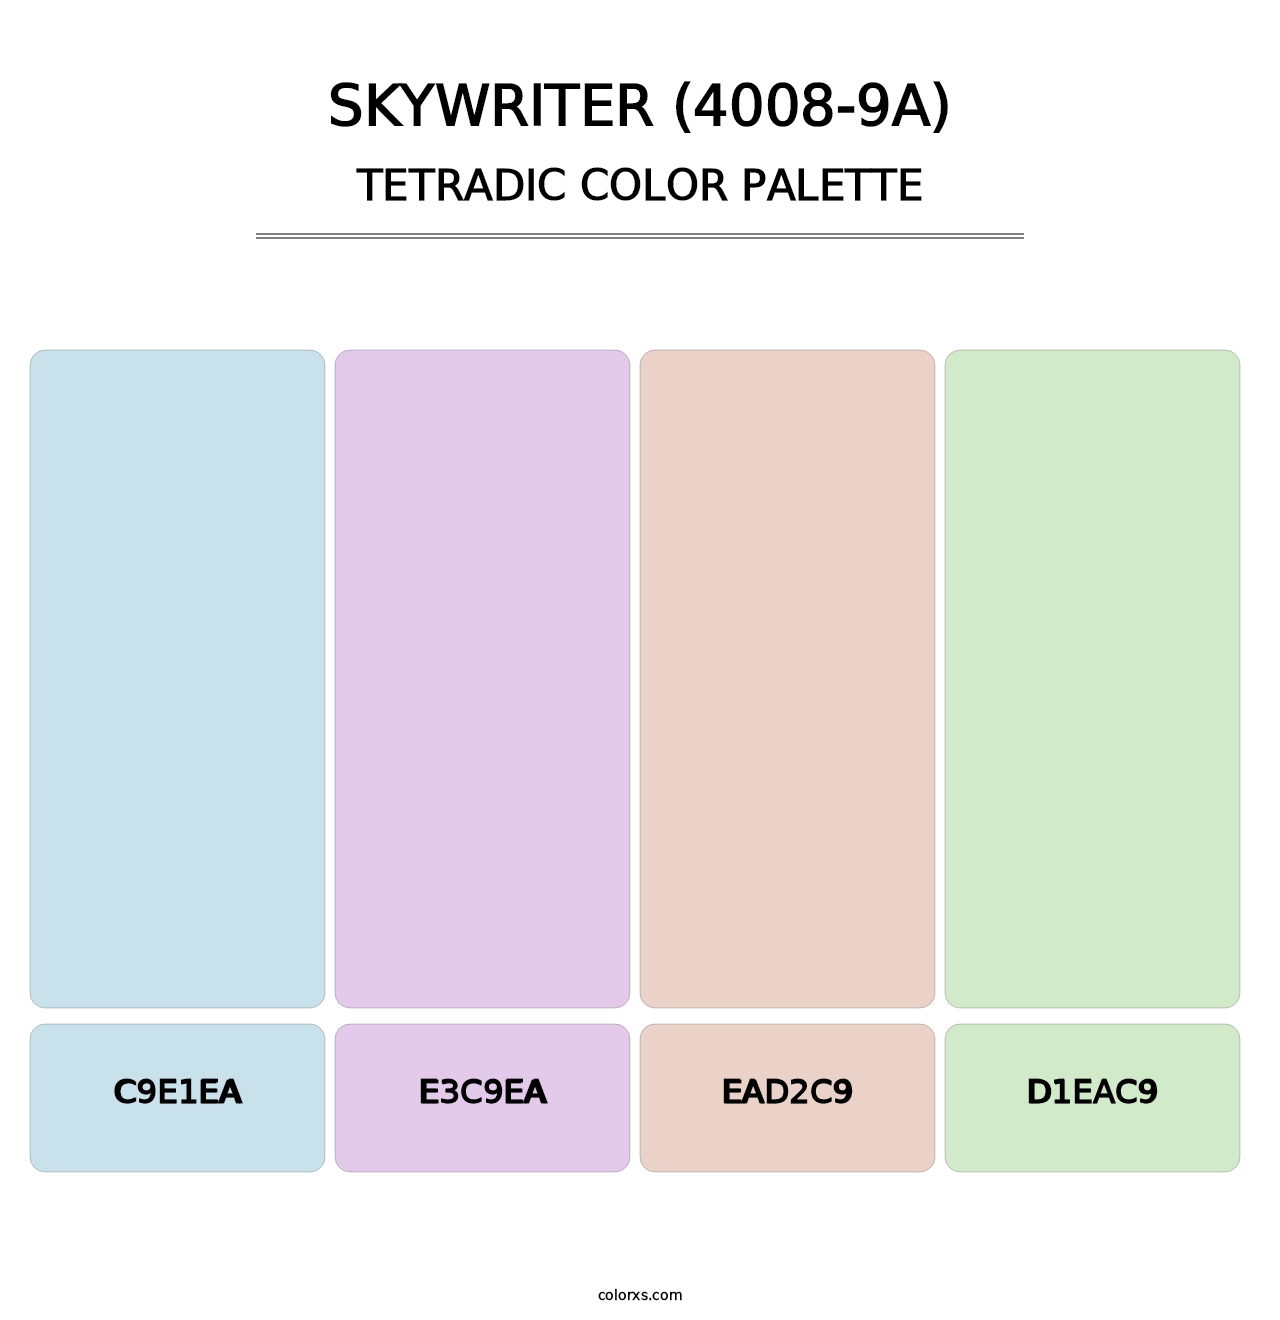 Skywriter (4008-9A) - Tetradic Color Palette